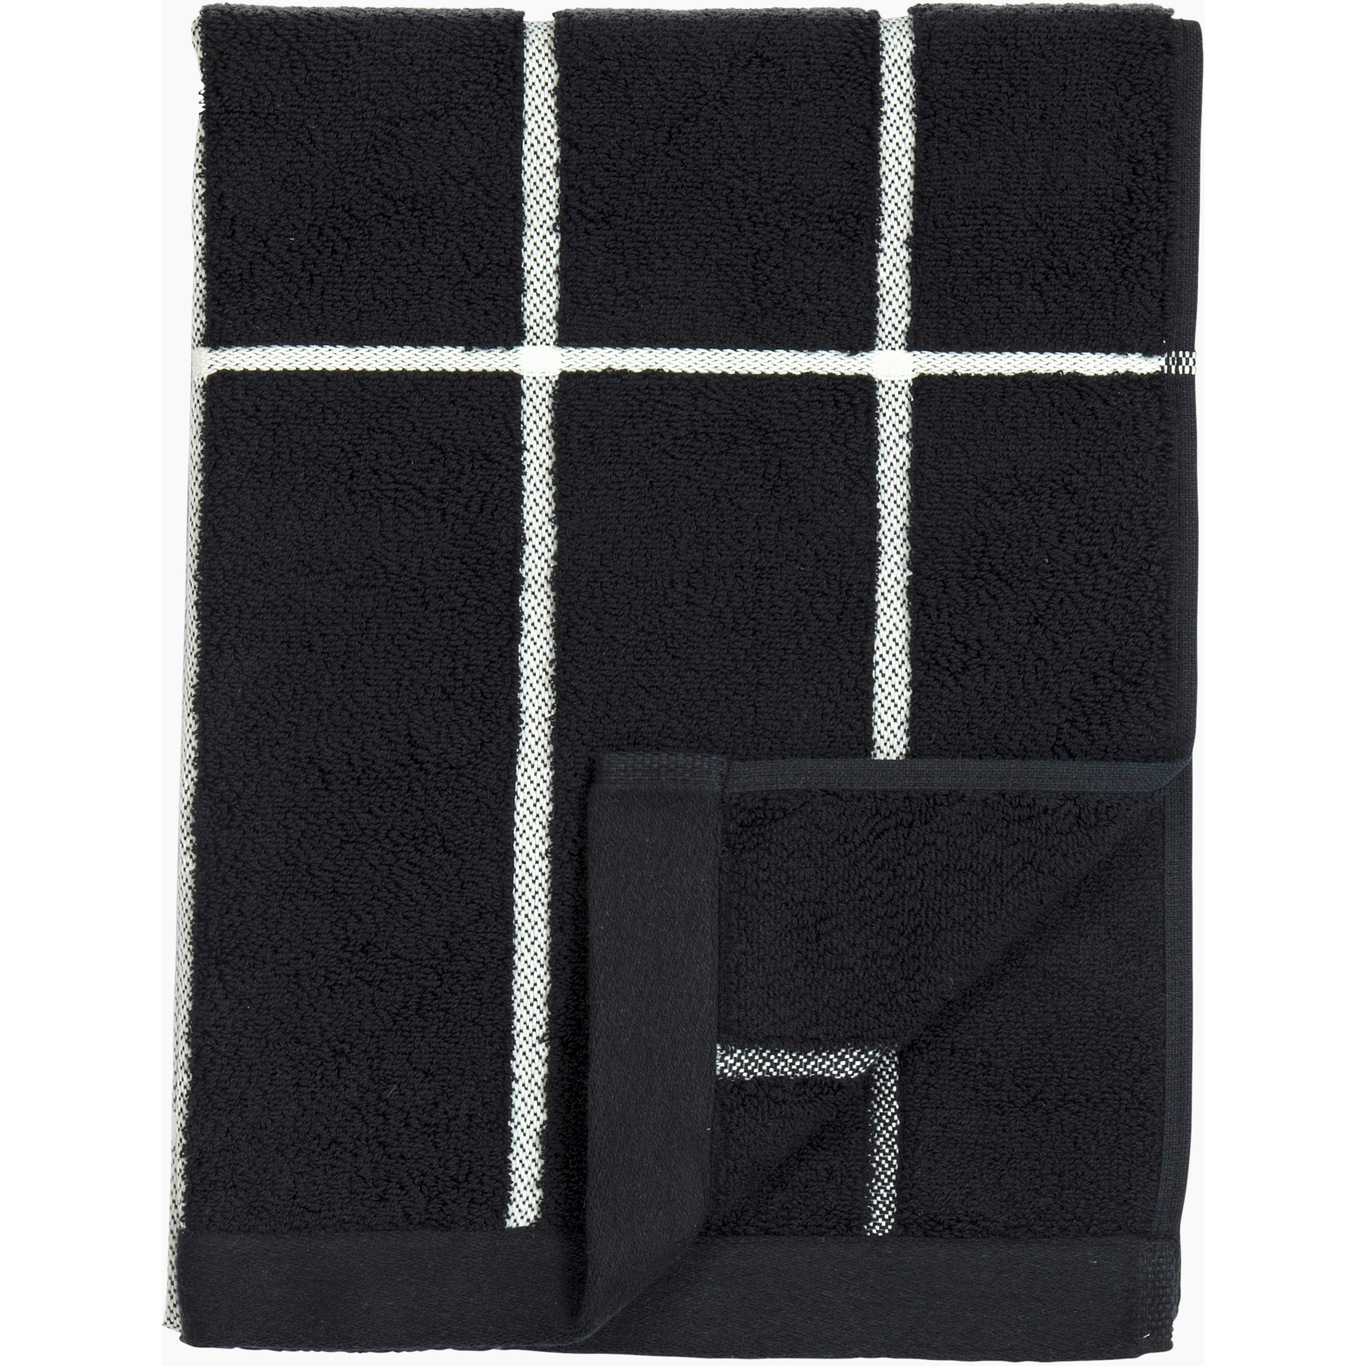 Tiiliskivi Towel Black / White, 50x70 cm